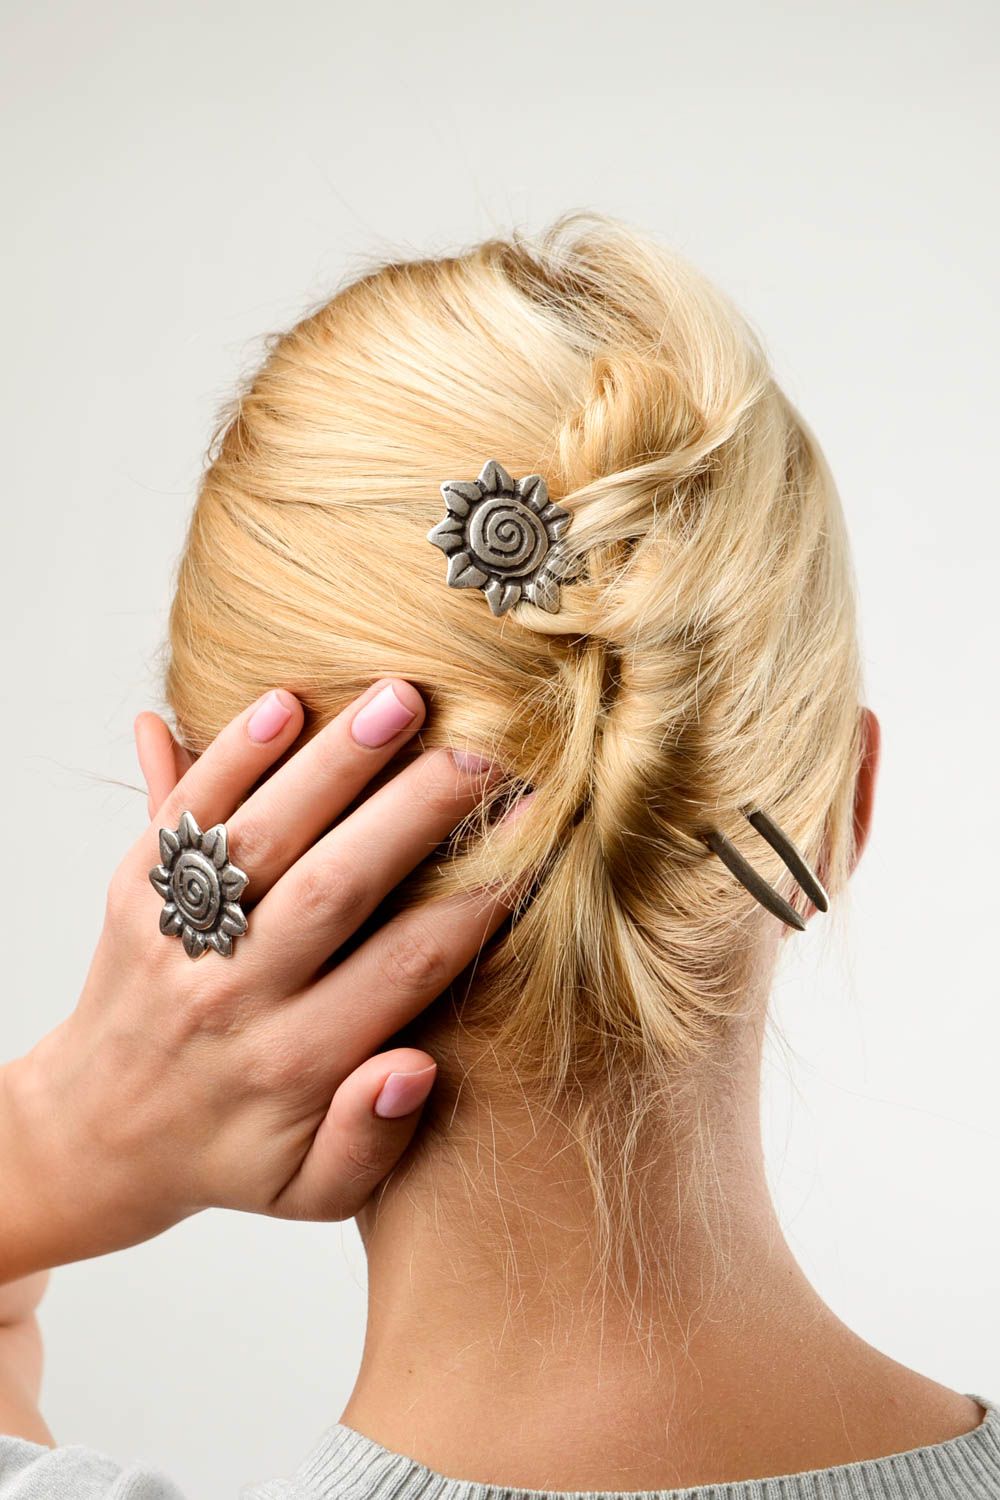 Stylis handmade metal hairpin designer hair accessories elegant hair gift ideas photo 2